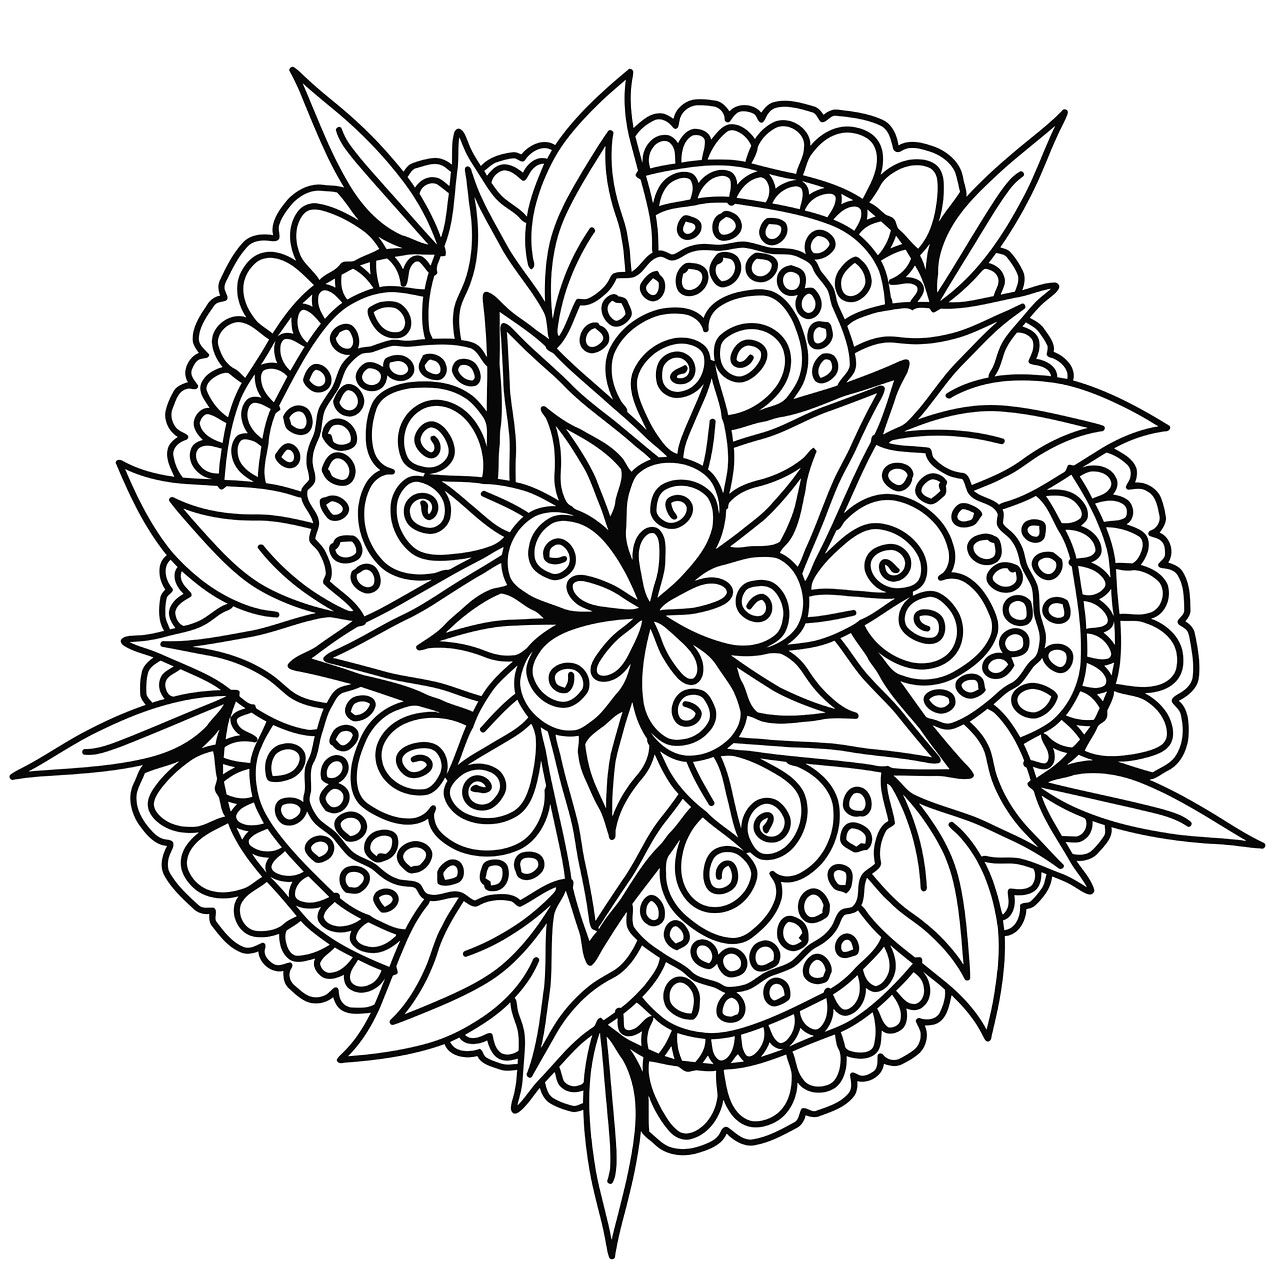 Download Awesome hand drawn Mandala - Mandalas Adult Coloring Pages